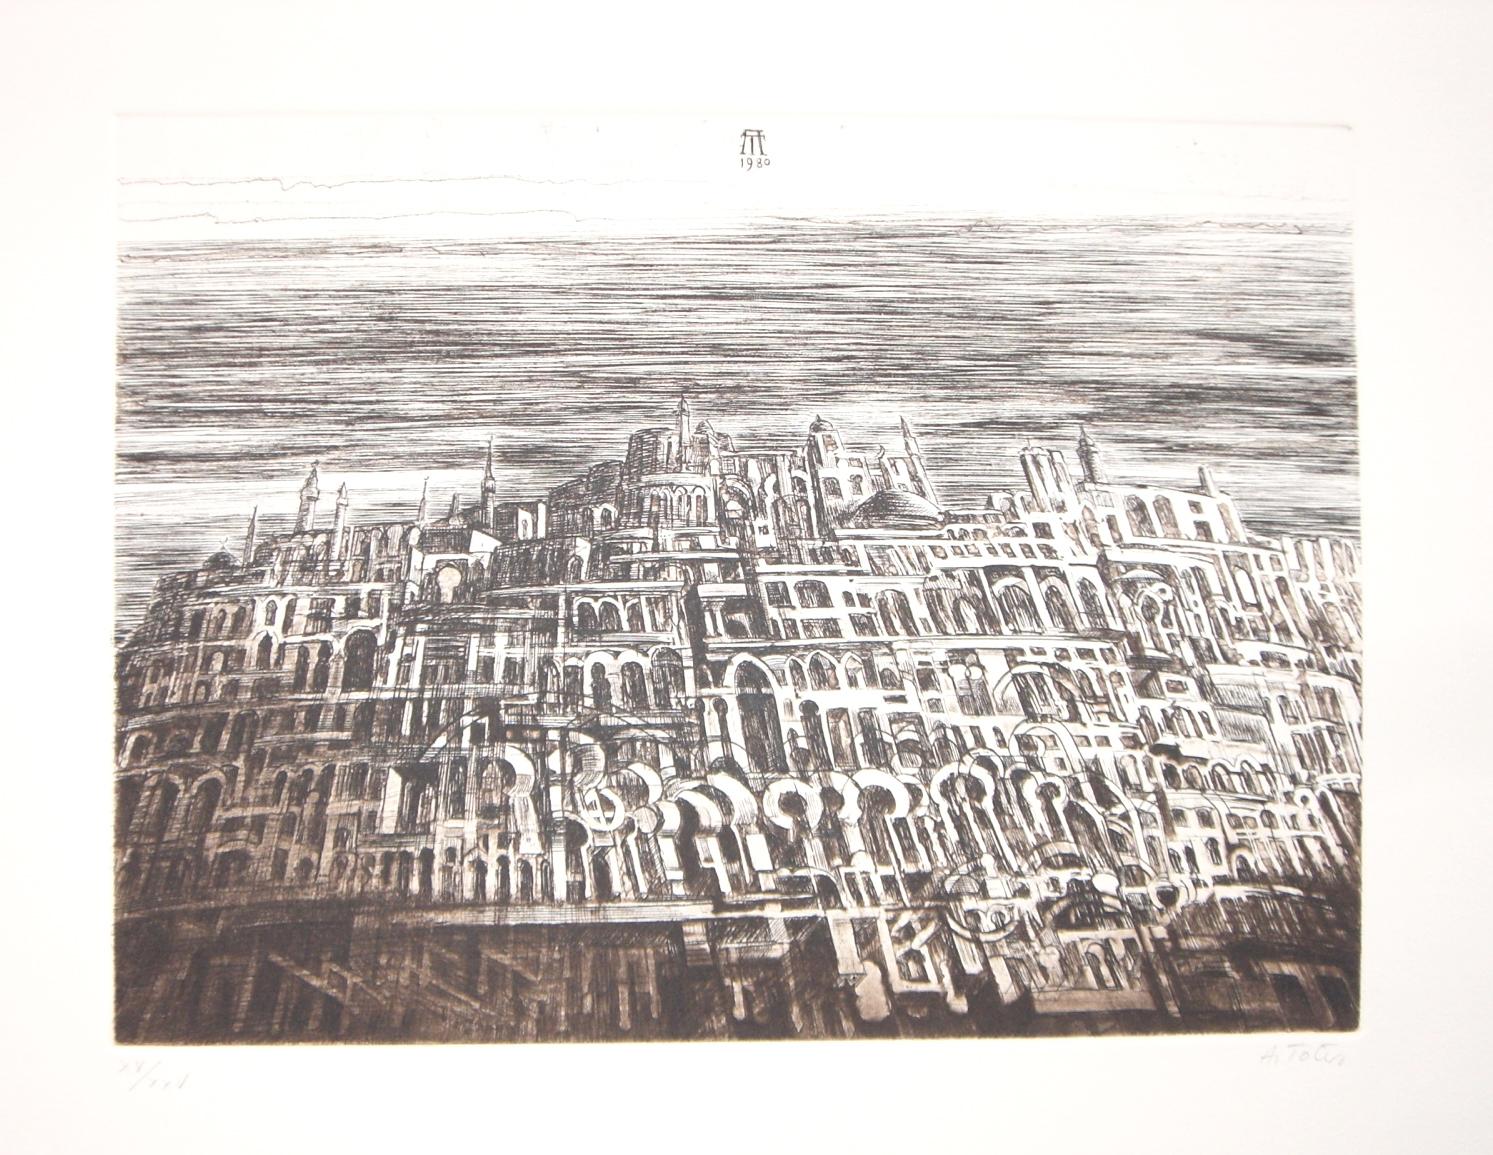 Arab City - Original-Radierung von Antonio de Totero - 1980 ca.